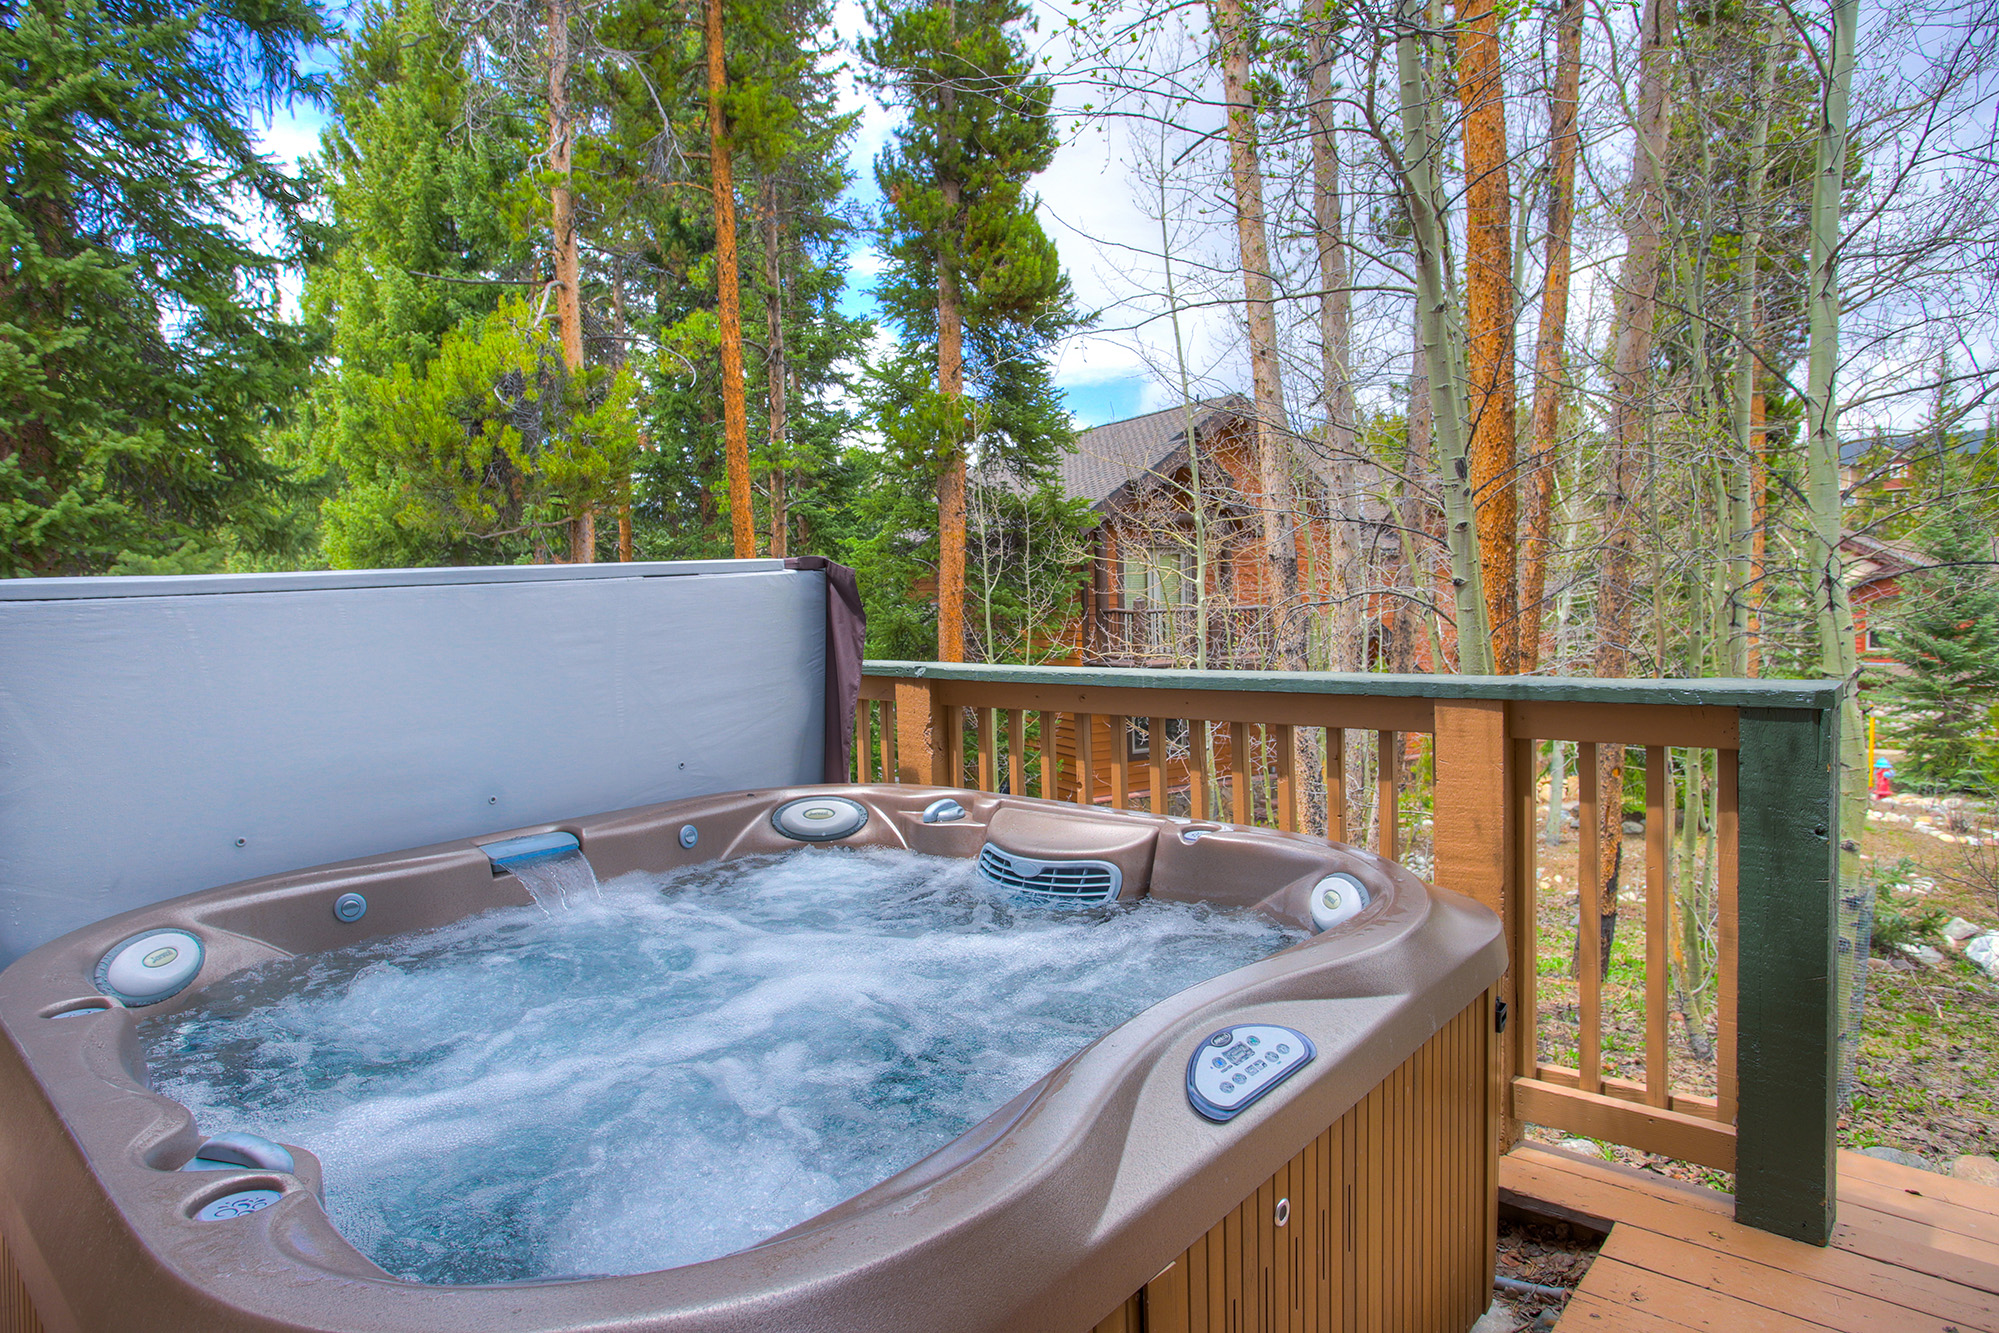 Hot tub - Friendly Fox Chalet - Breckenridge vacation rental